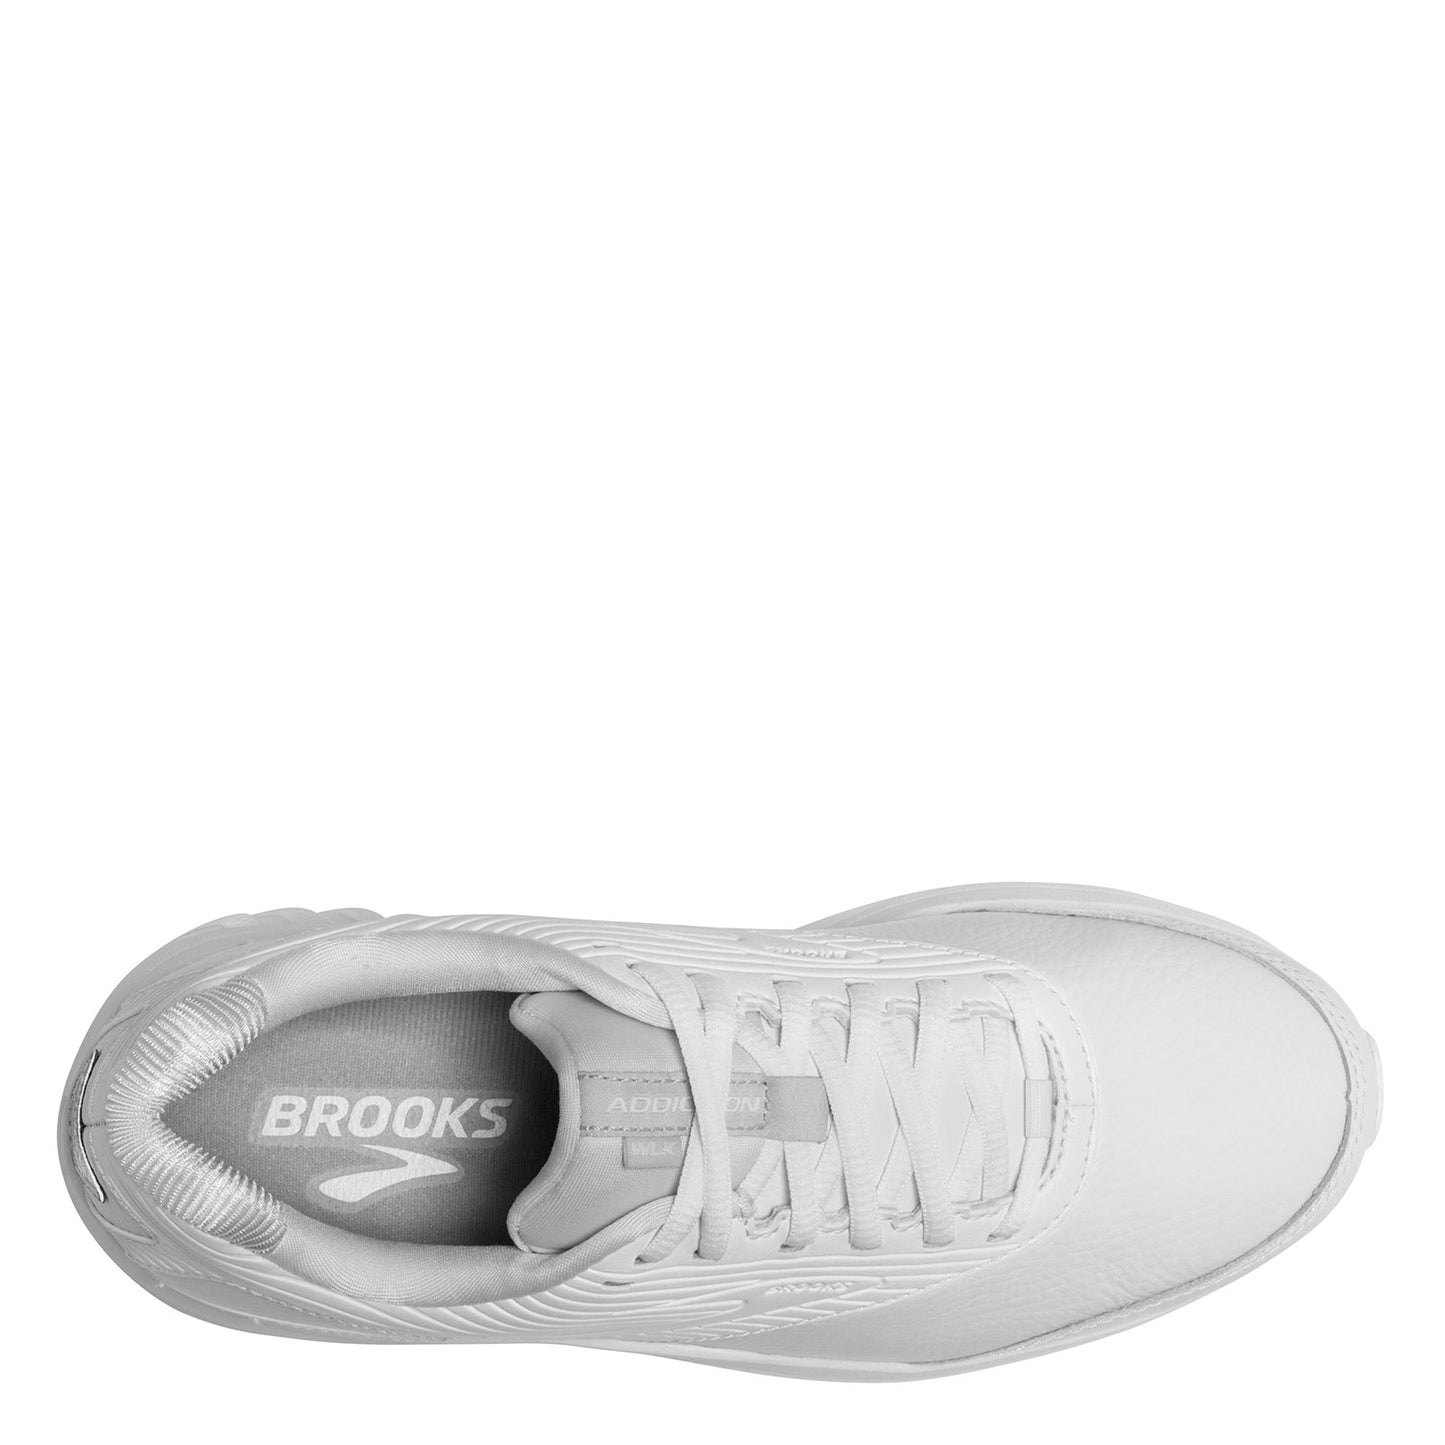 Peltz Shoes  Women's Brooks Addiction Walker 2 Walking Shoe - Narrow Width White/White 120307 2A 142